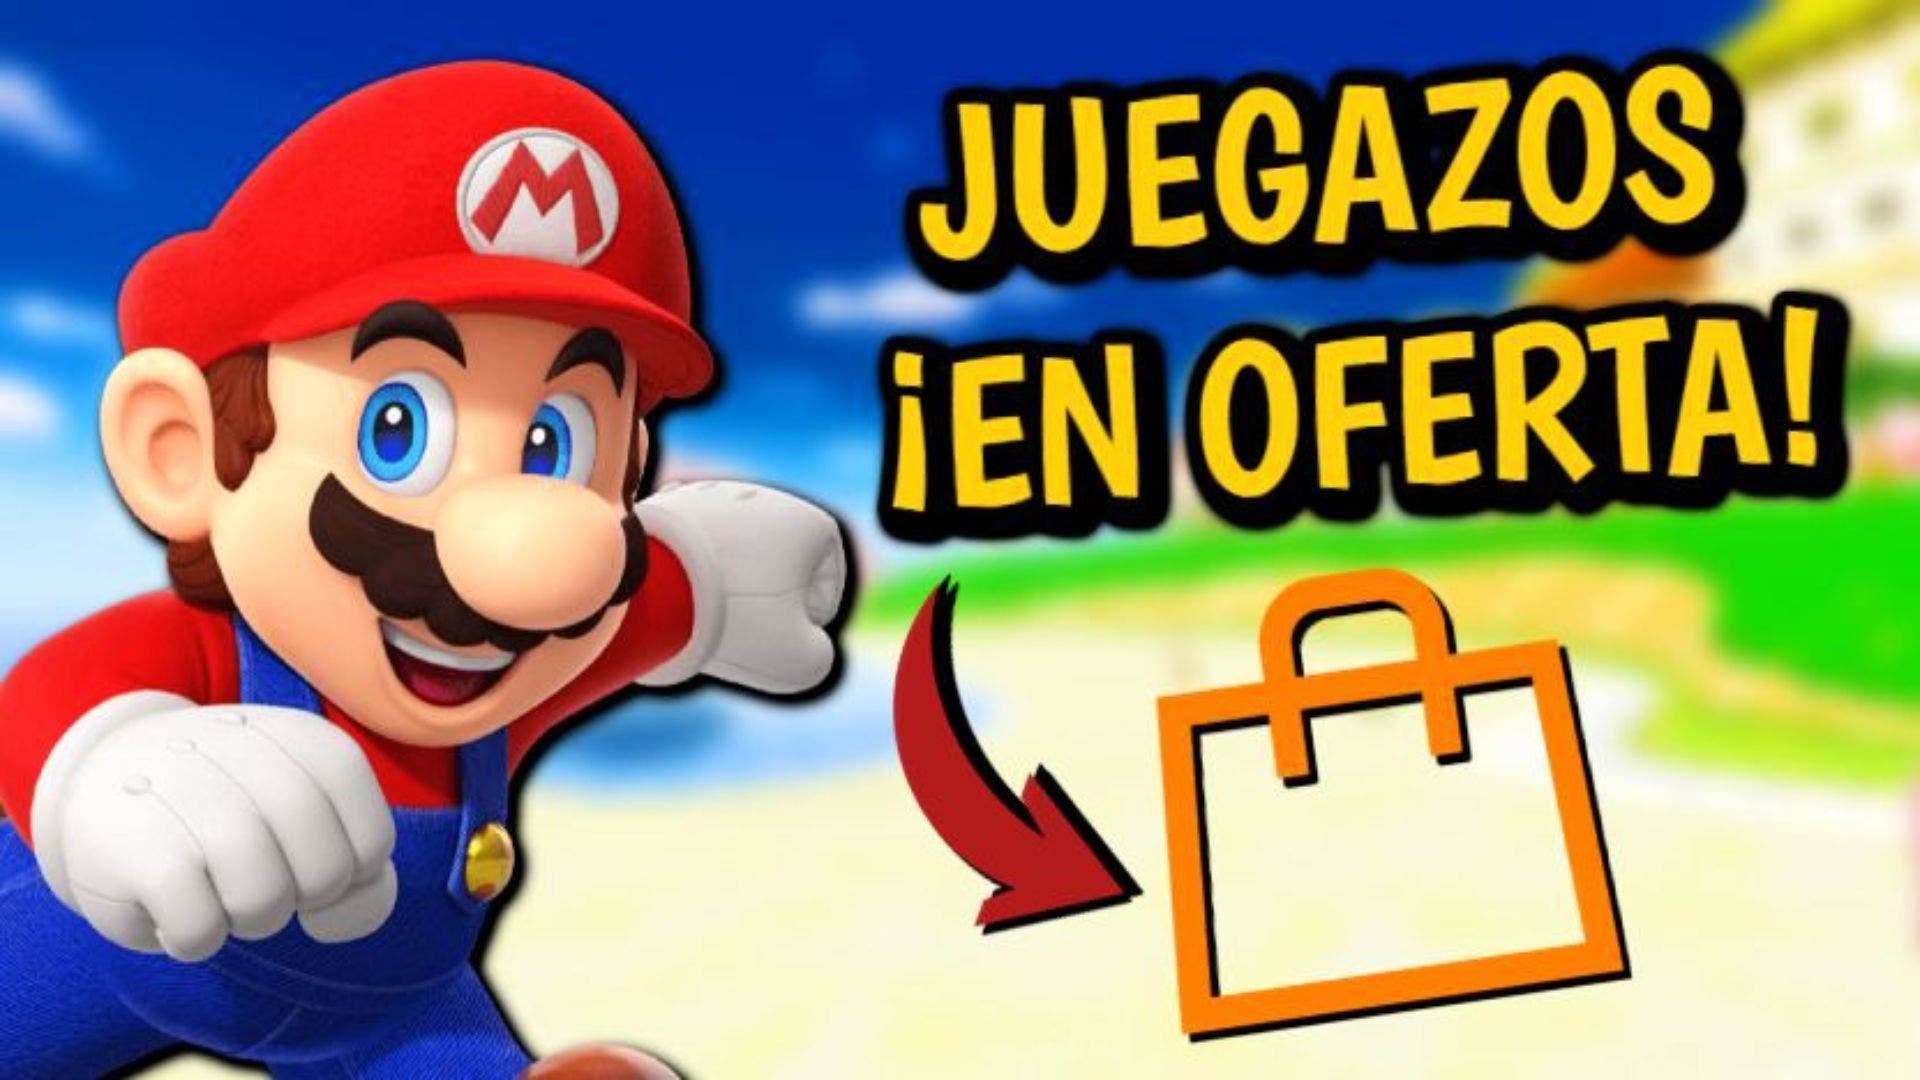 20 ofertas de juegos de Nintendo Switch por menos de 10 euros